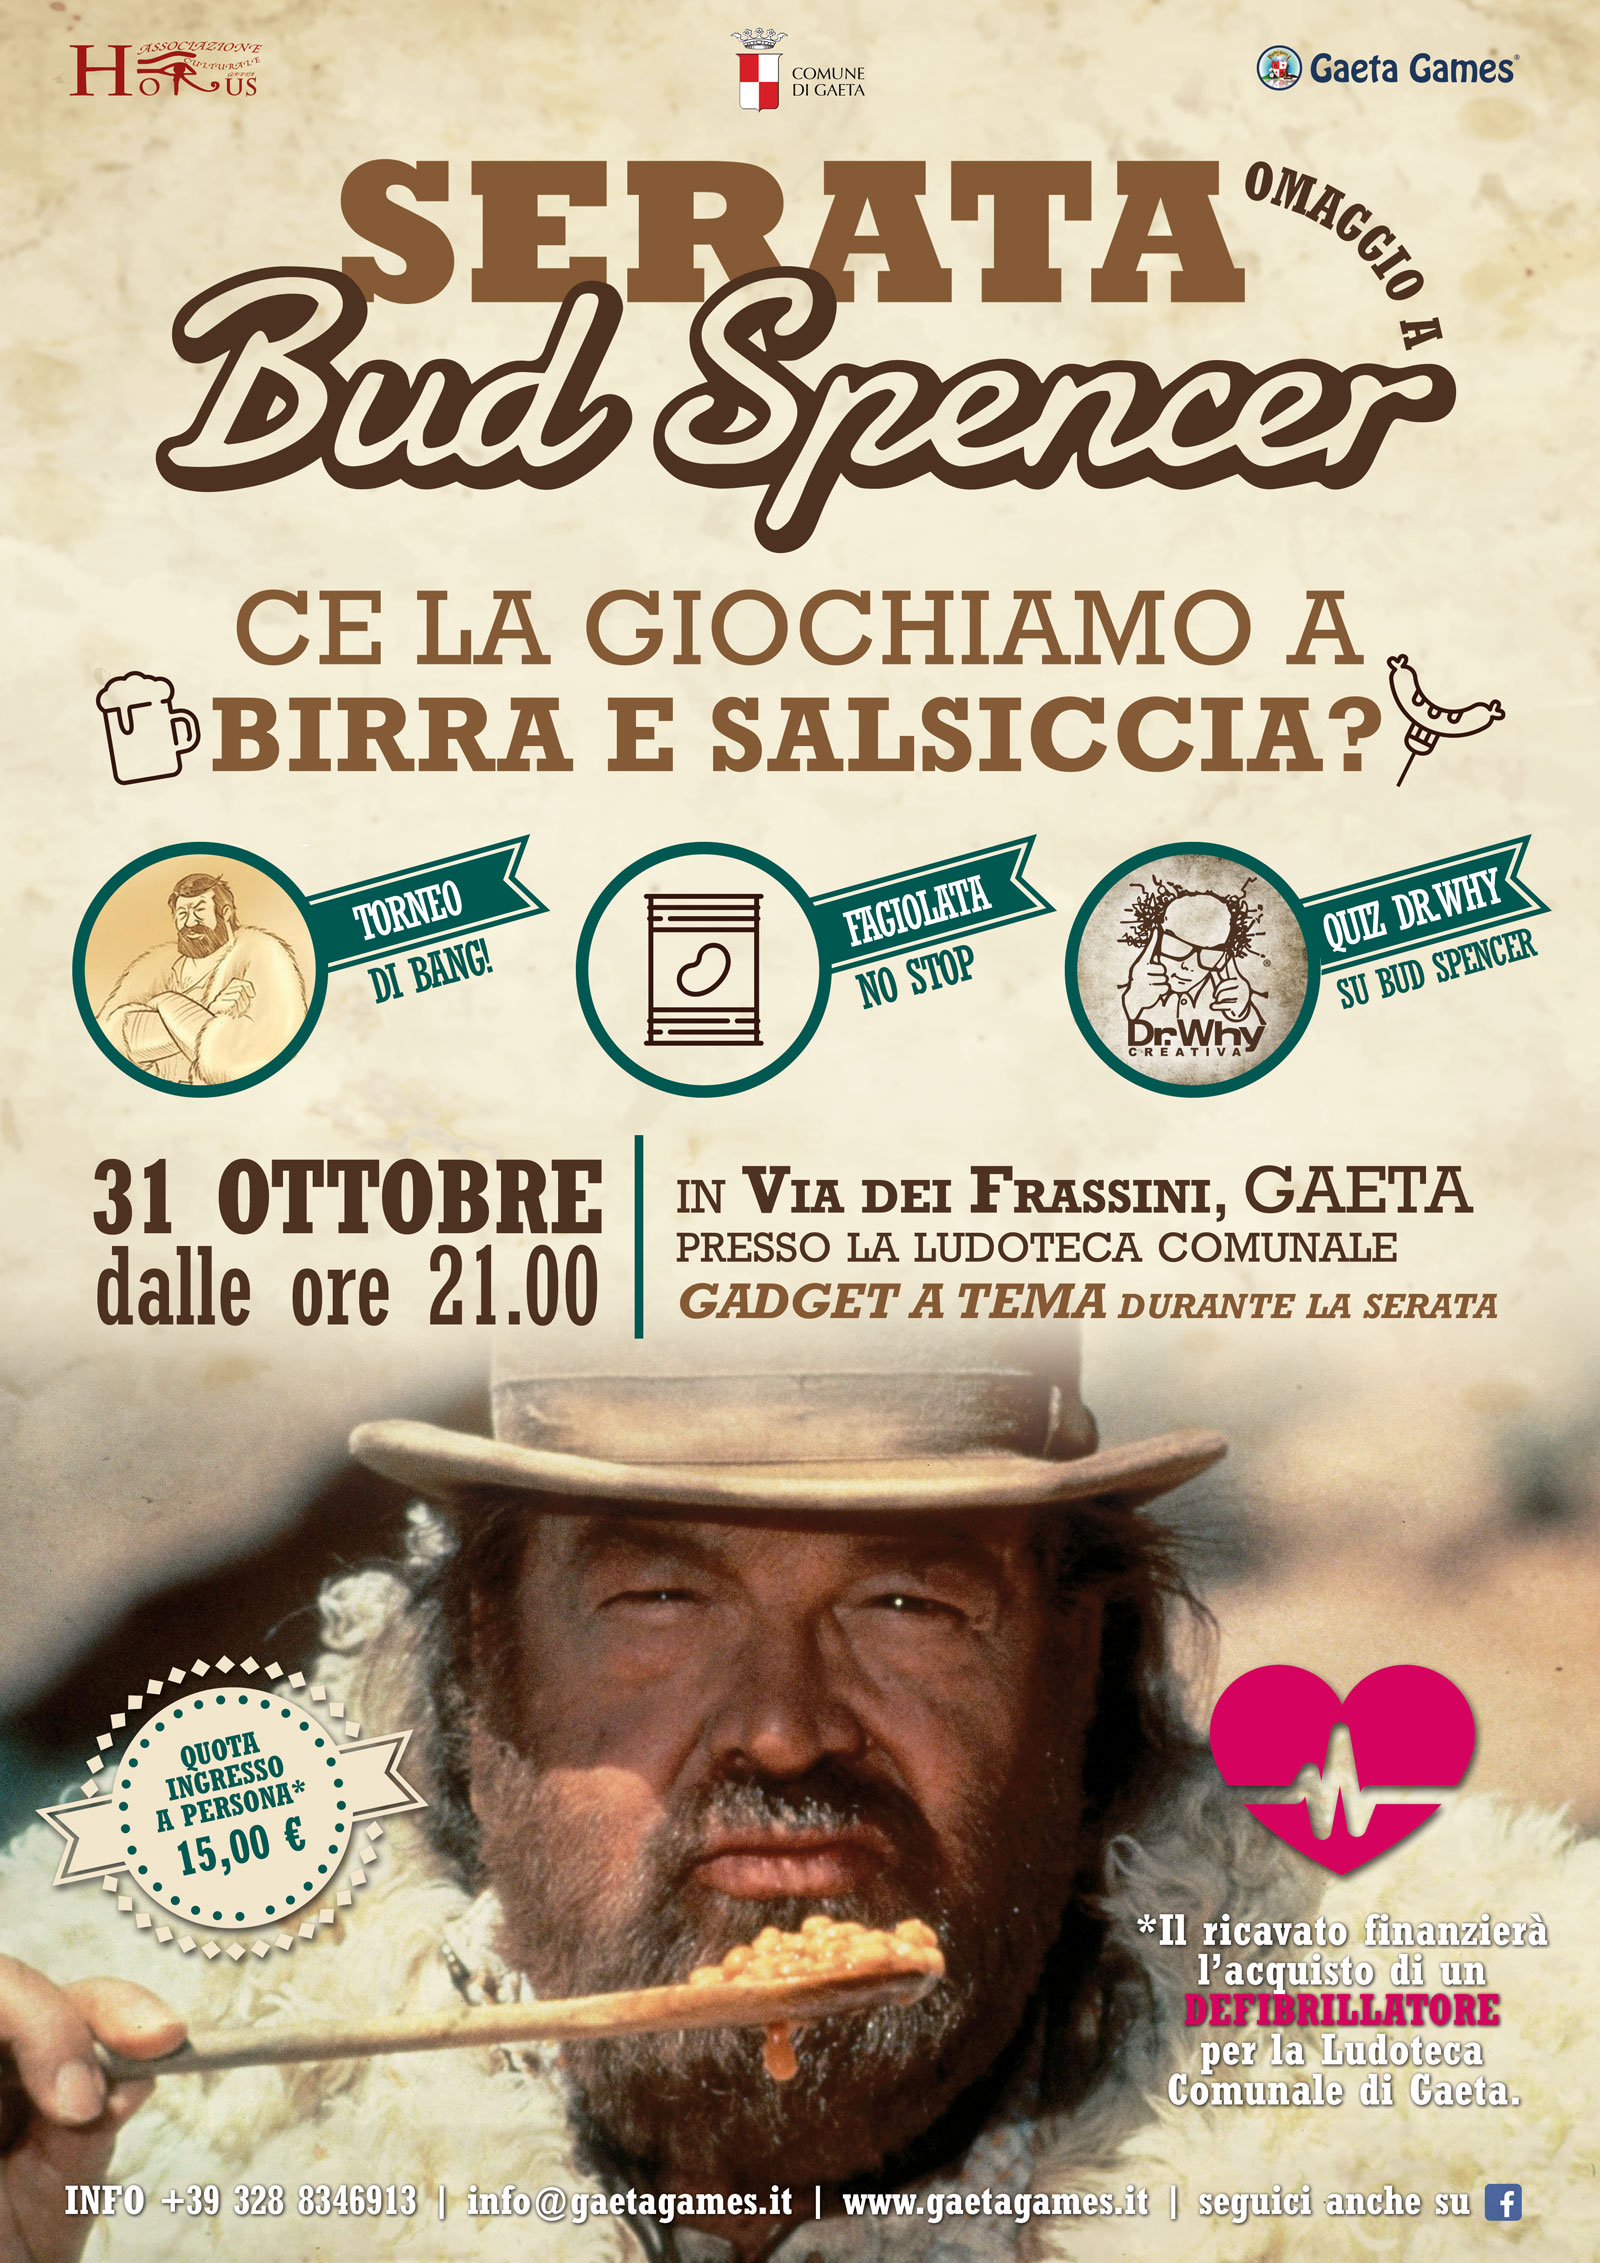 http://www.prolocogaeta.it/public/images/Bud-Spencer-serata.jpg